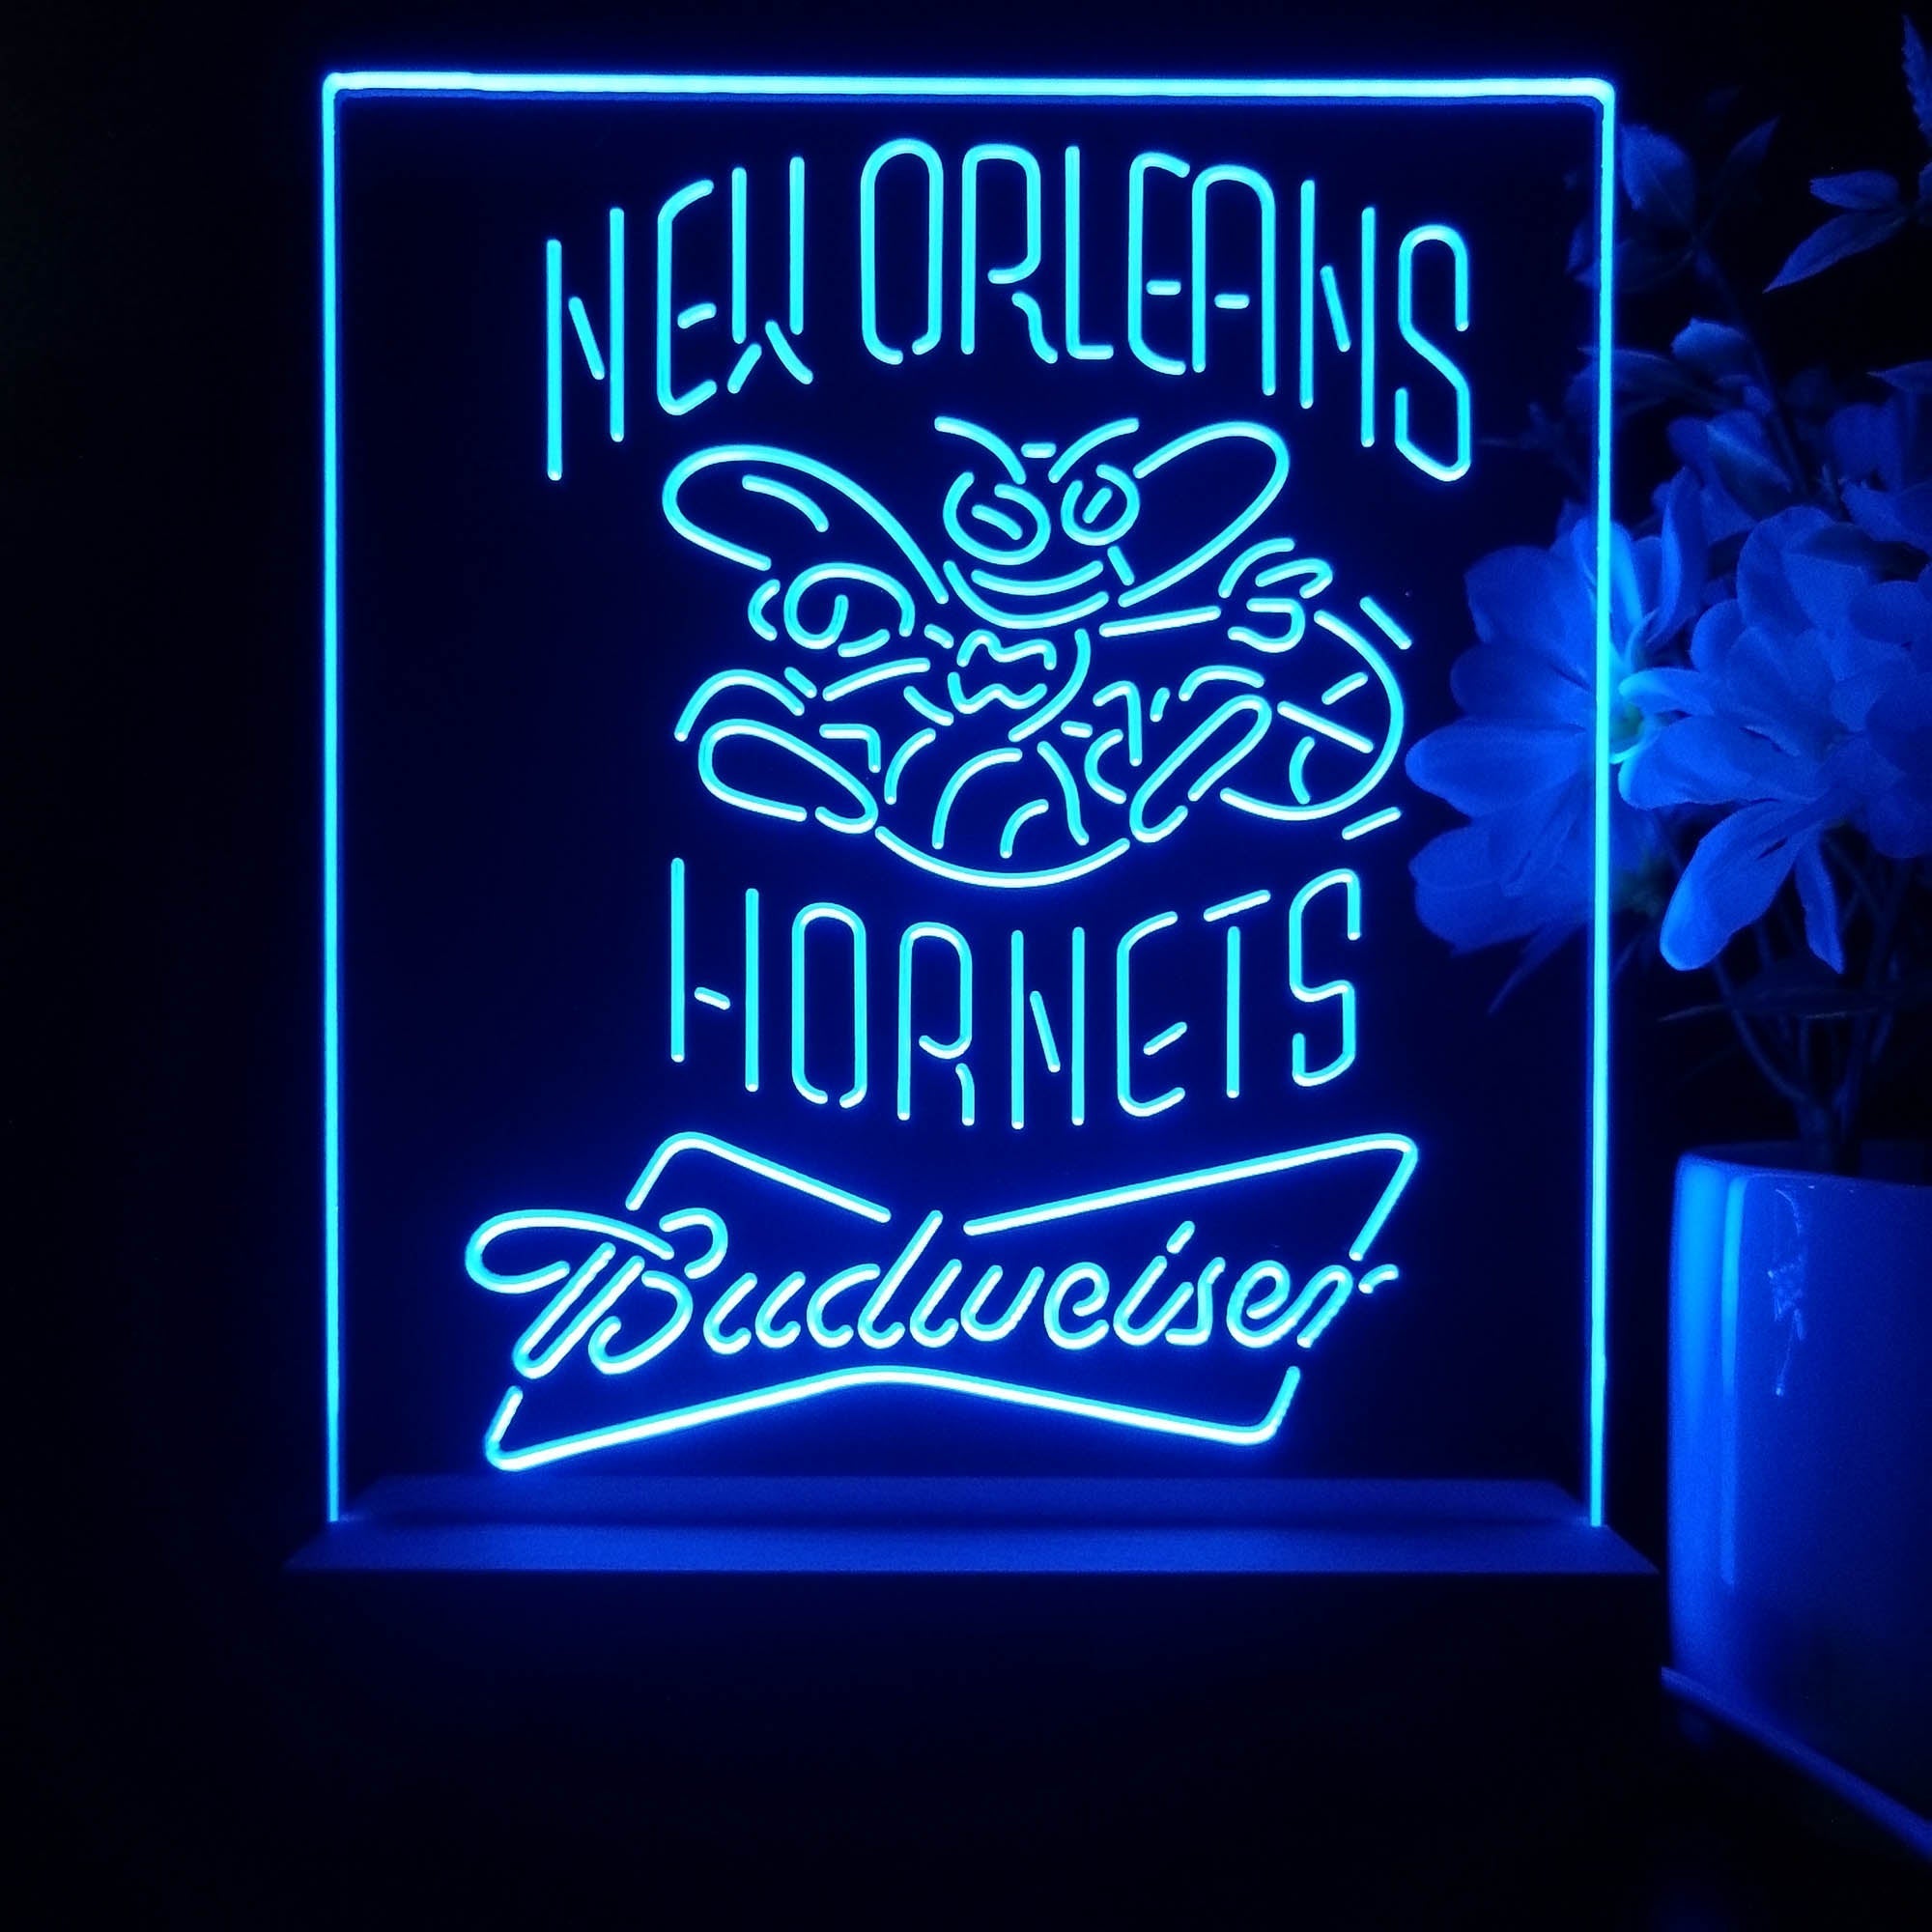 New Orleans Hornets Budweiser Neon Sign Pub Bar Lamp